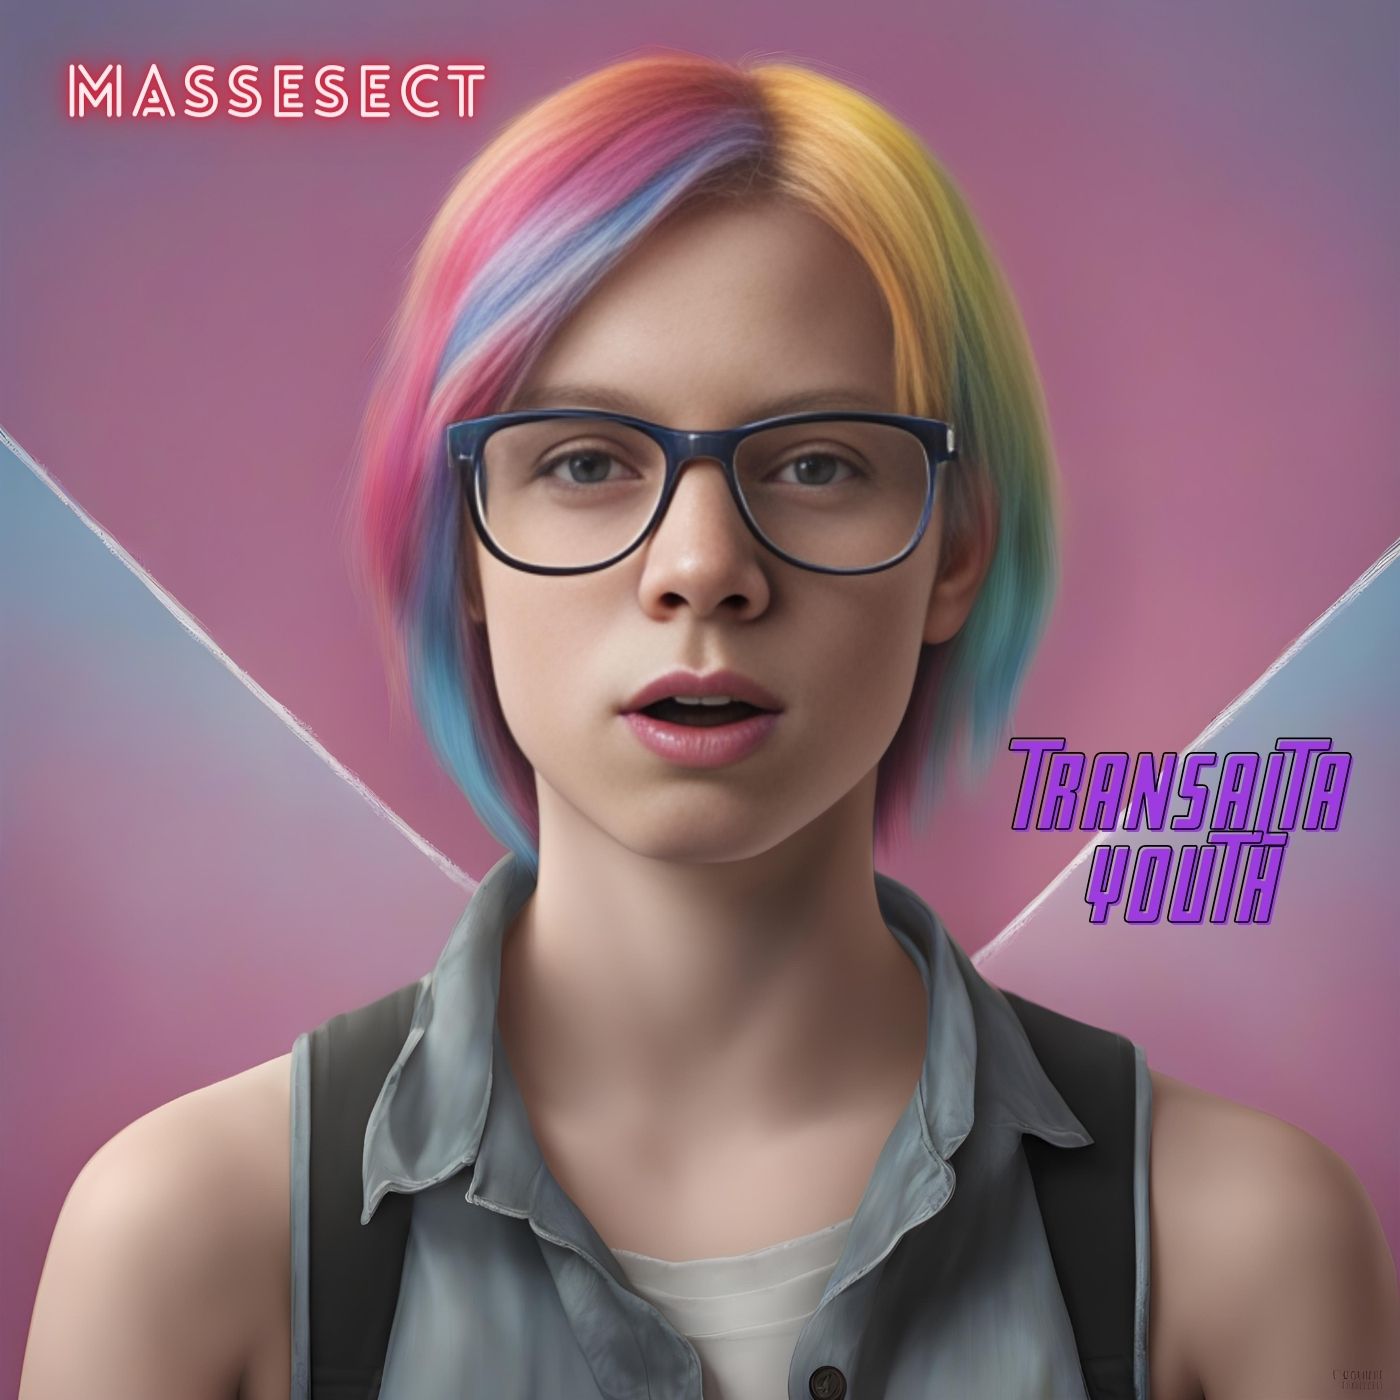 Massesect - Transalta Youth Cover.jpeg